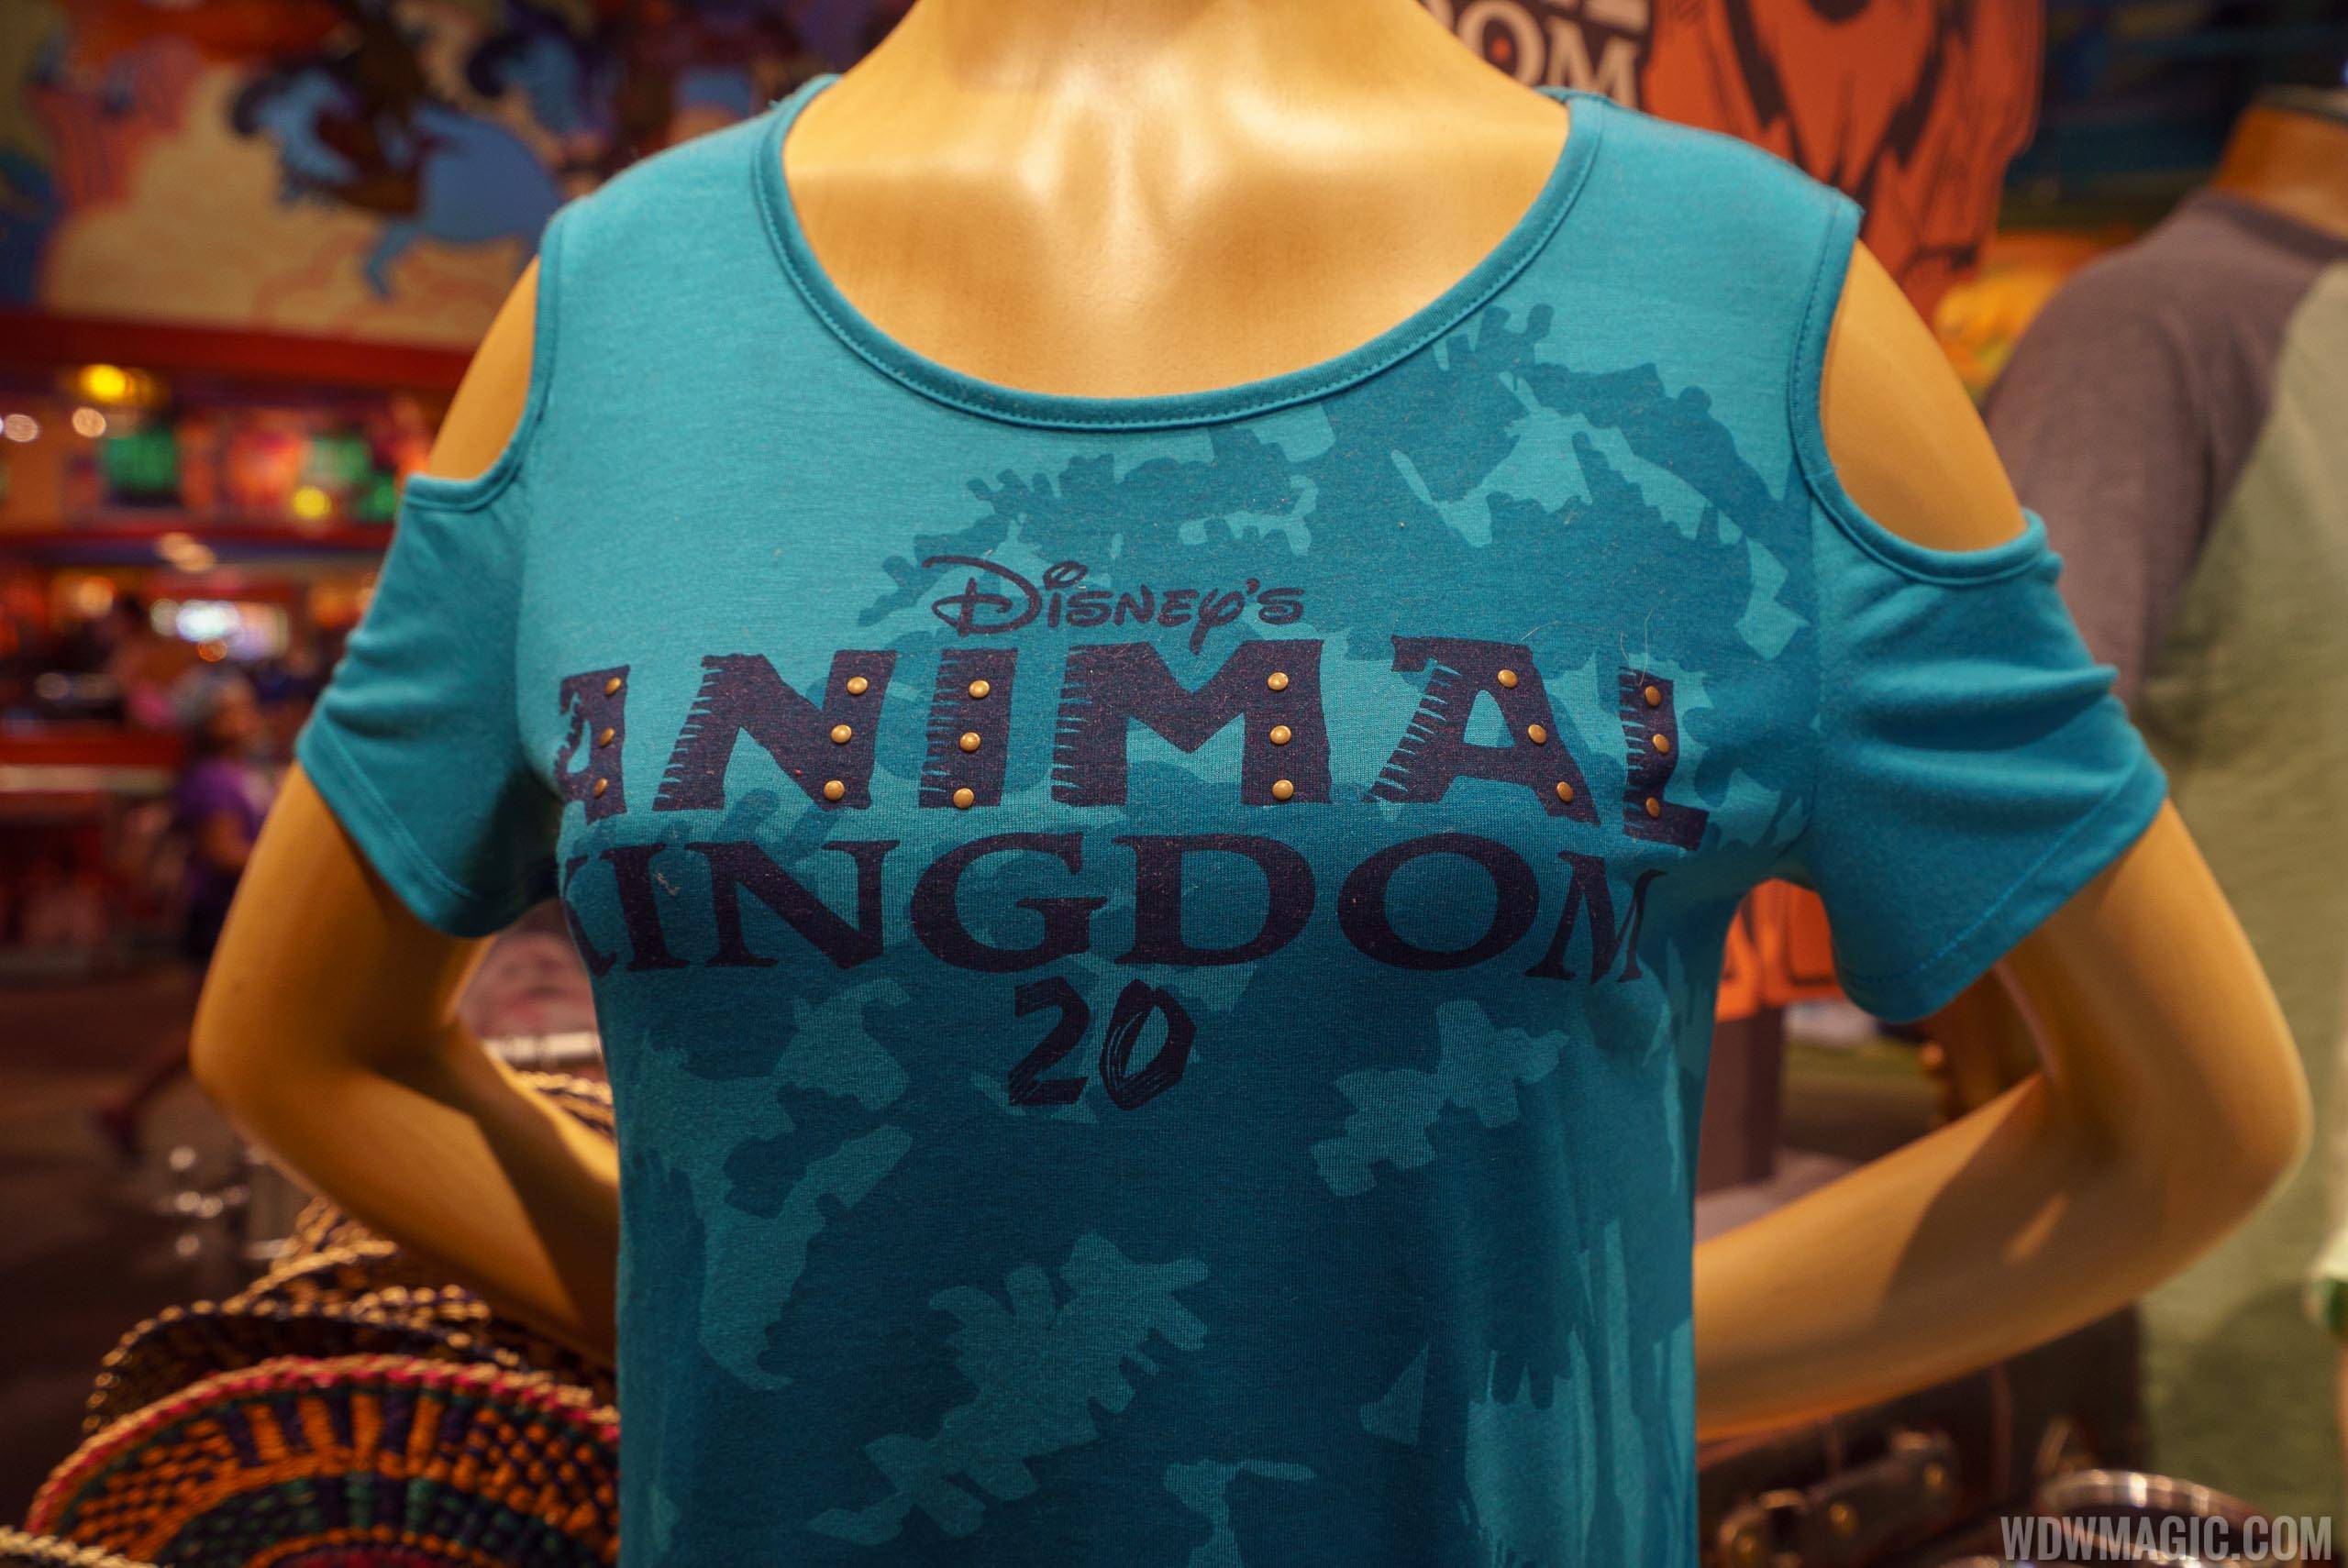 Disney's Animal Kingdom 20th anniversary merchandise